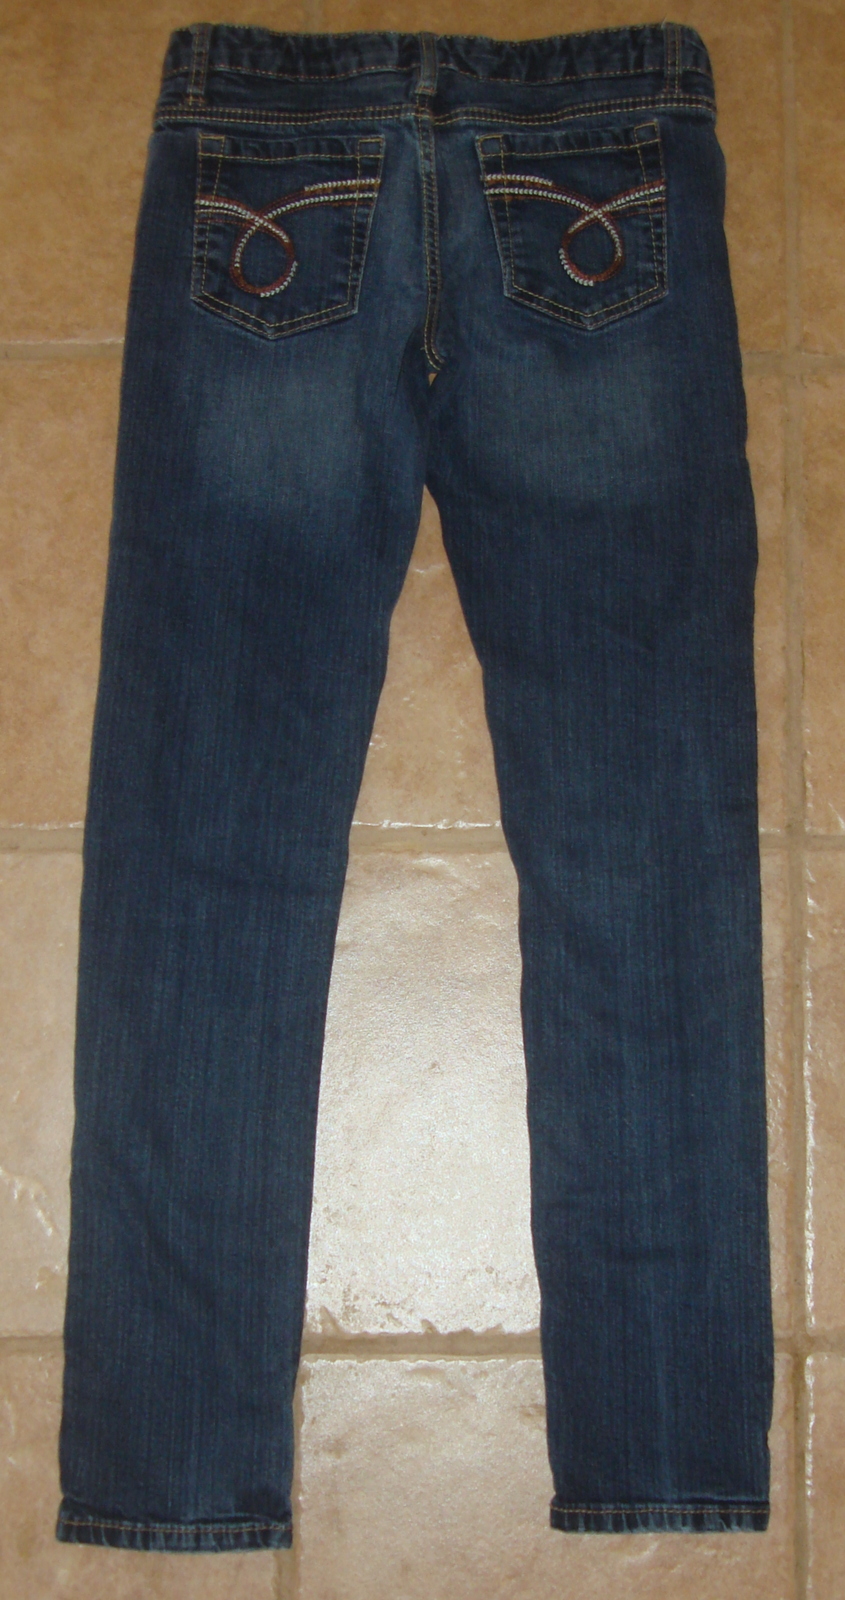 rue 21 skinny jeans